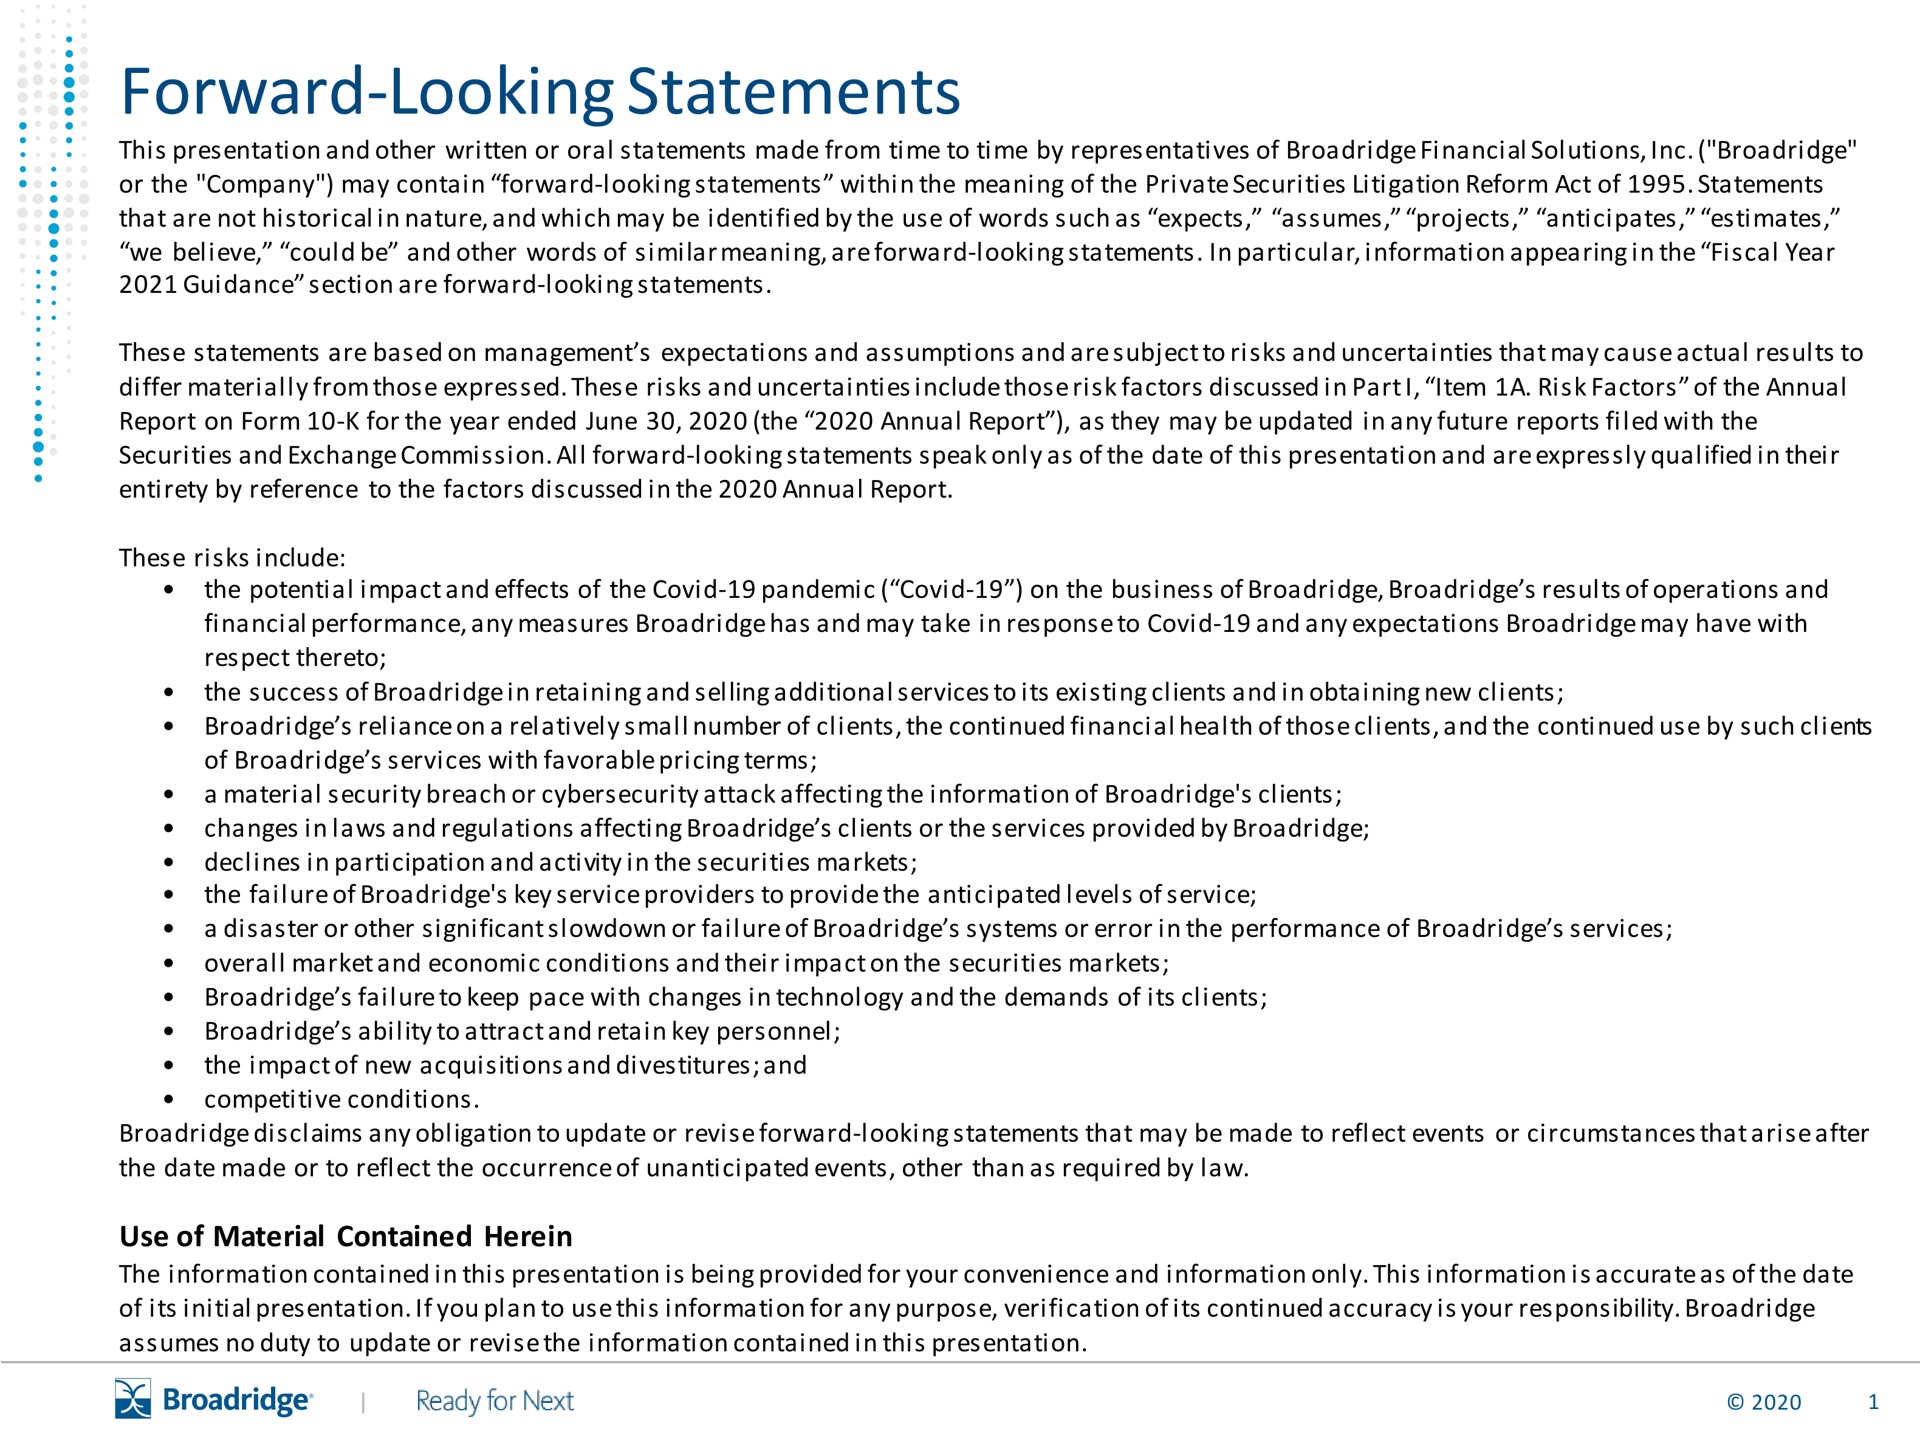 forward looking statements | Broadridge Financial Solutions